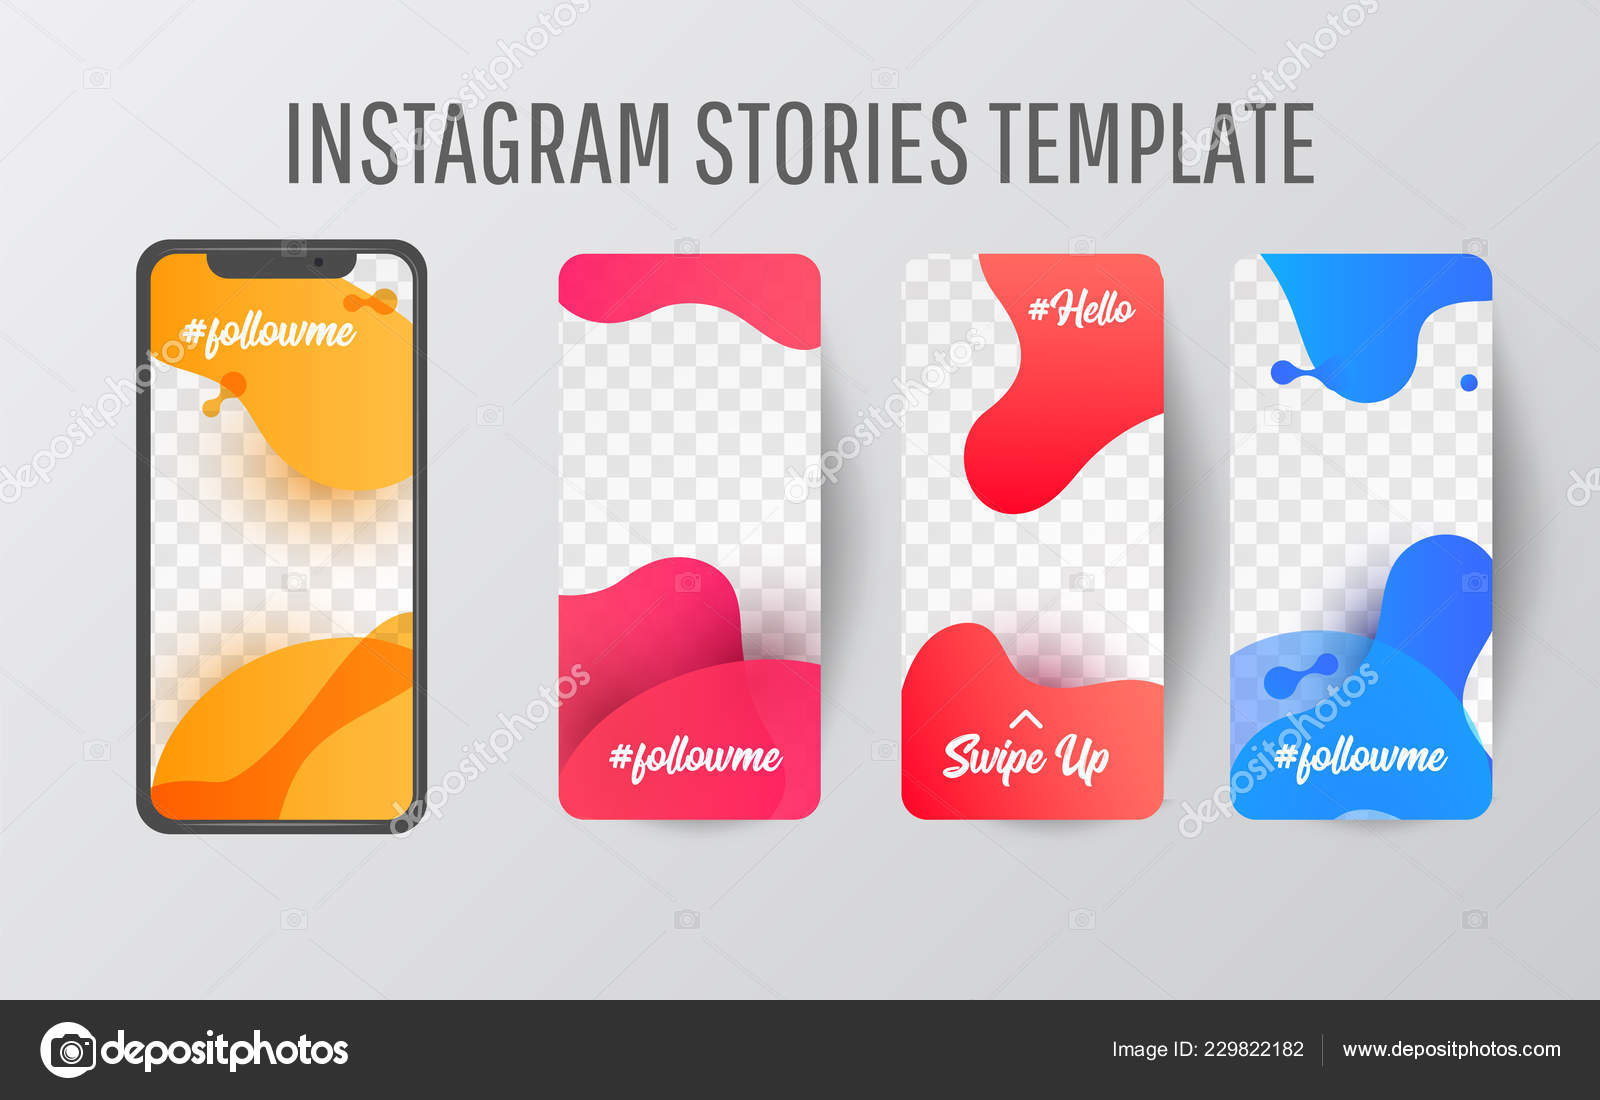 Template Instagram Stories, Mentirinhas